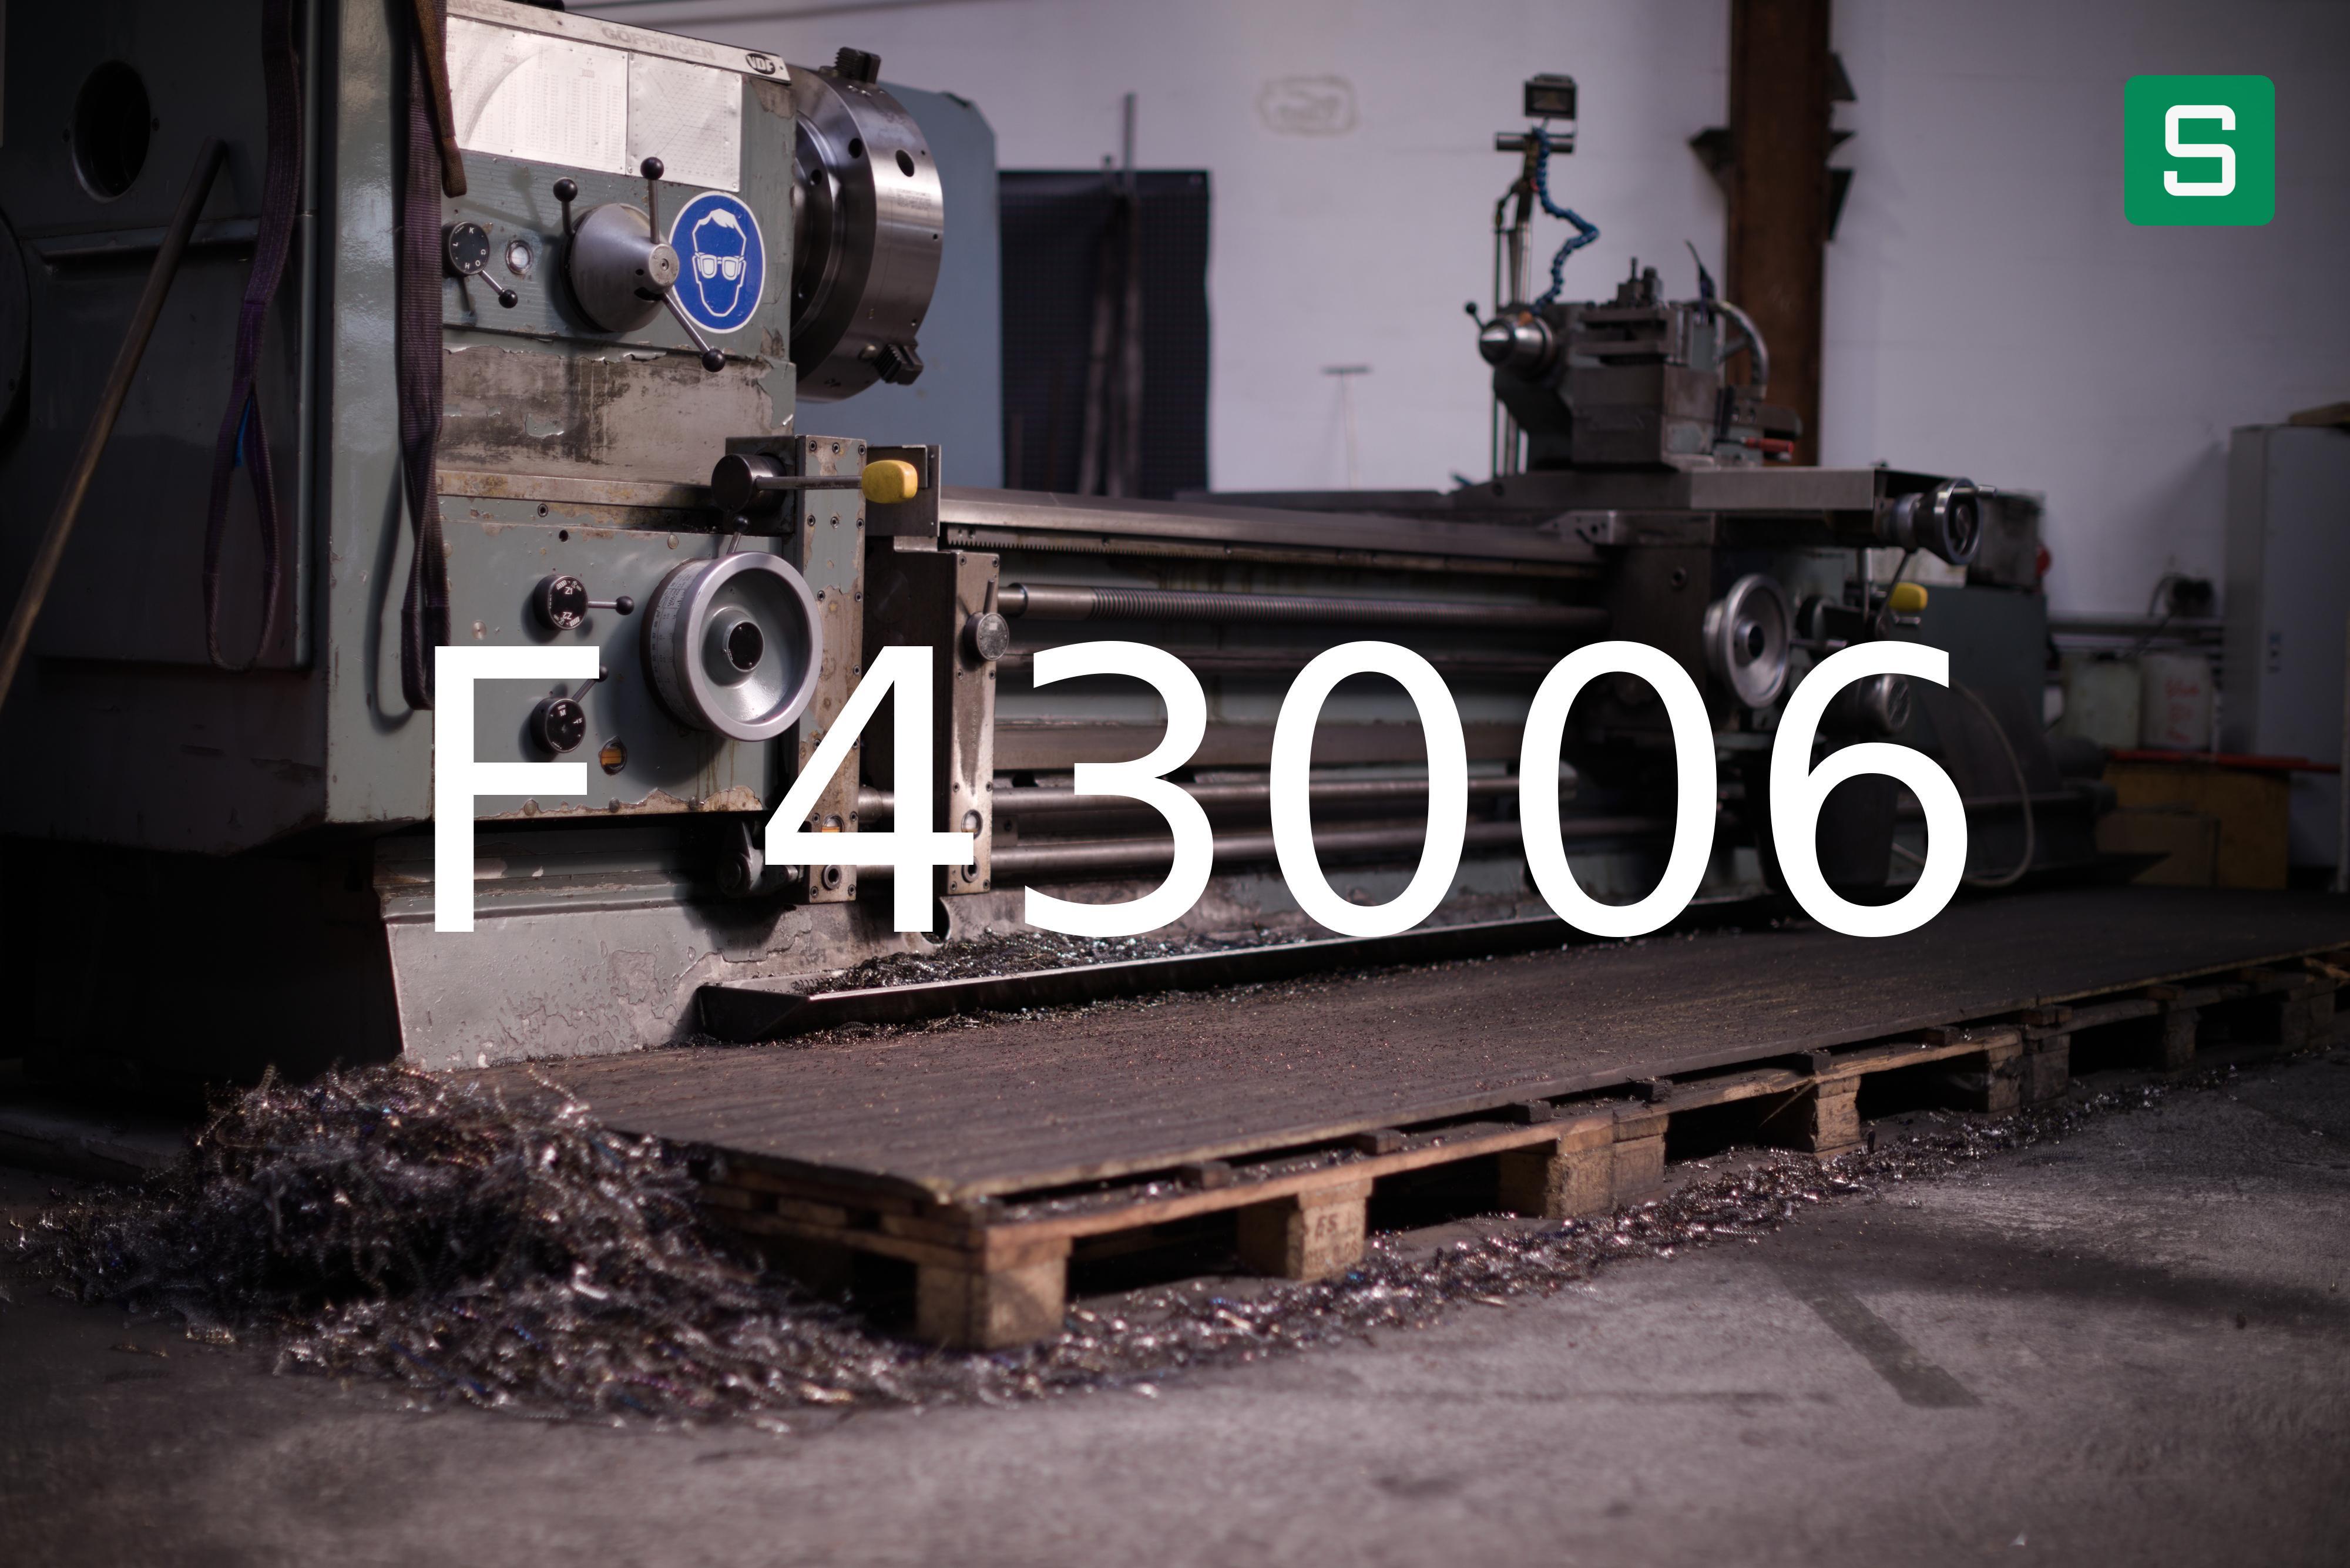 Steel Material: F 43006